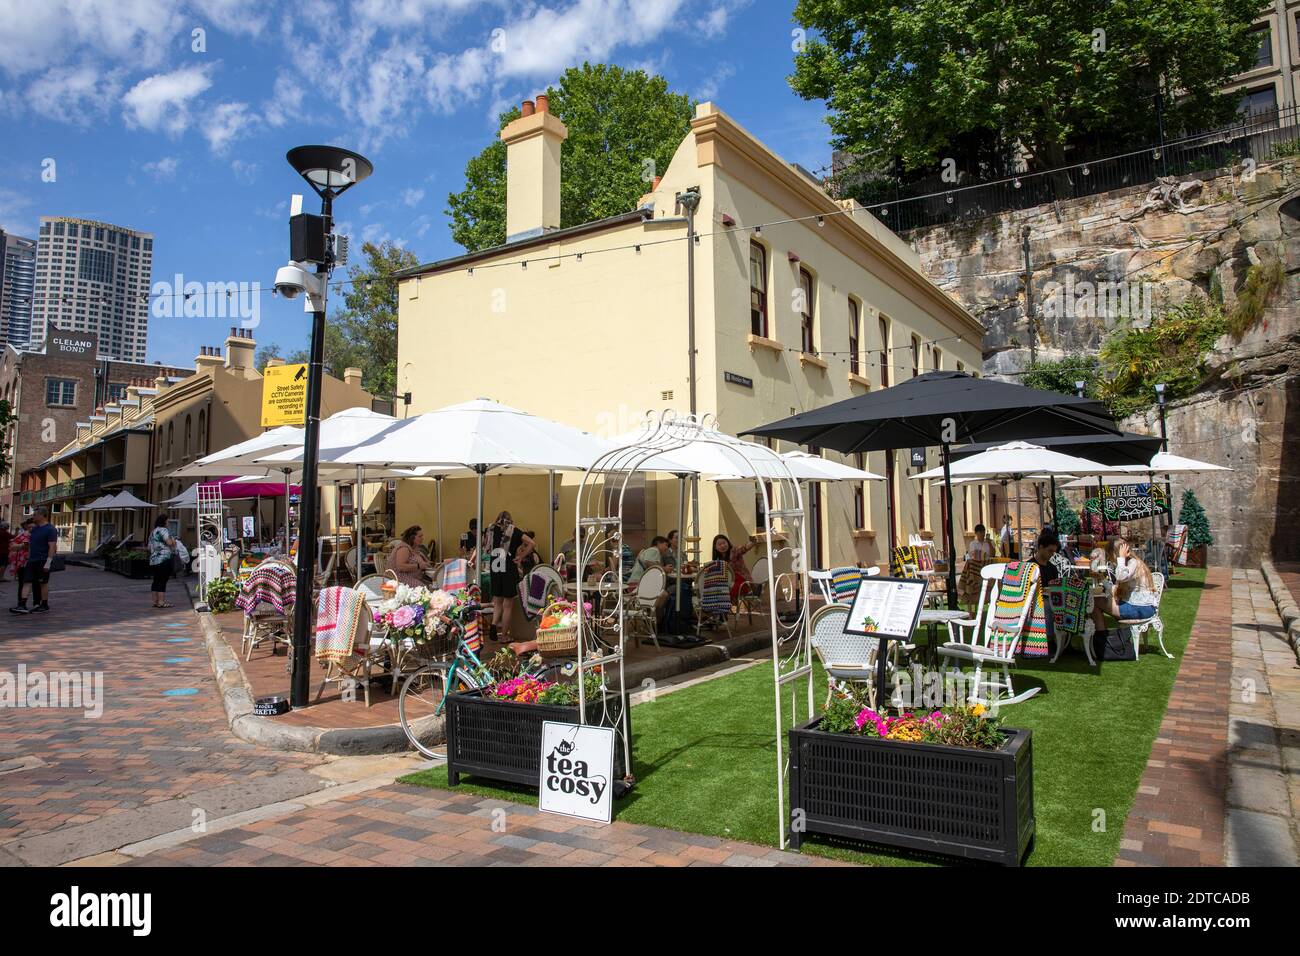 The Tea Cosy cafe restaurant and tea shop in the Rocks area of Sydney city centre,NSW,Australia Stock Photo